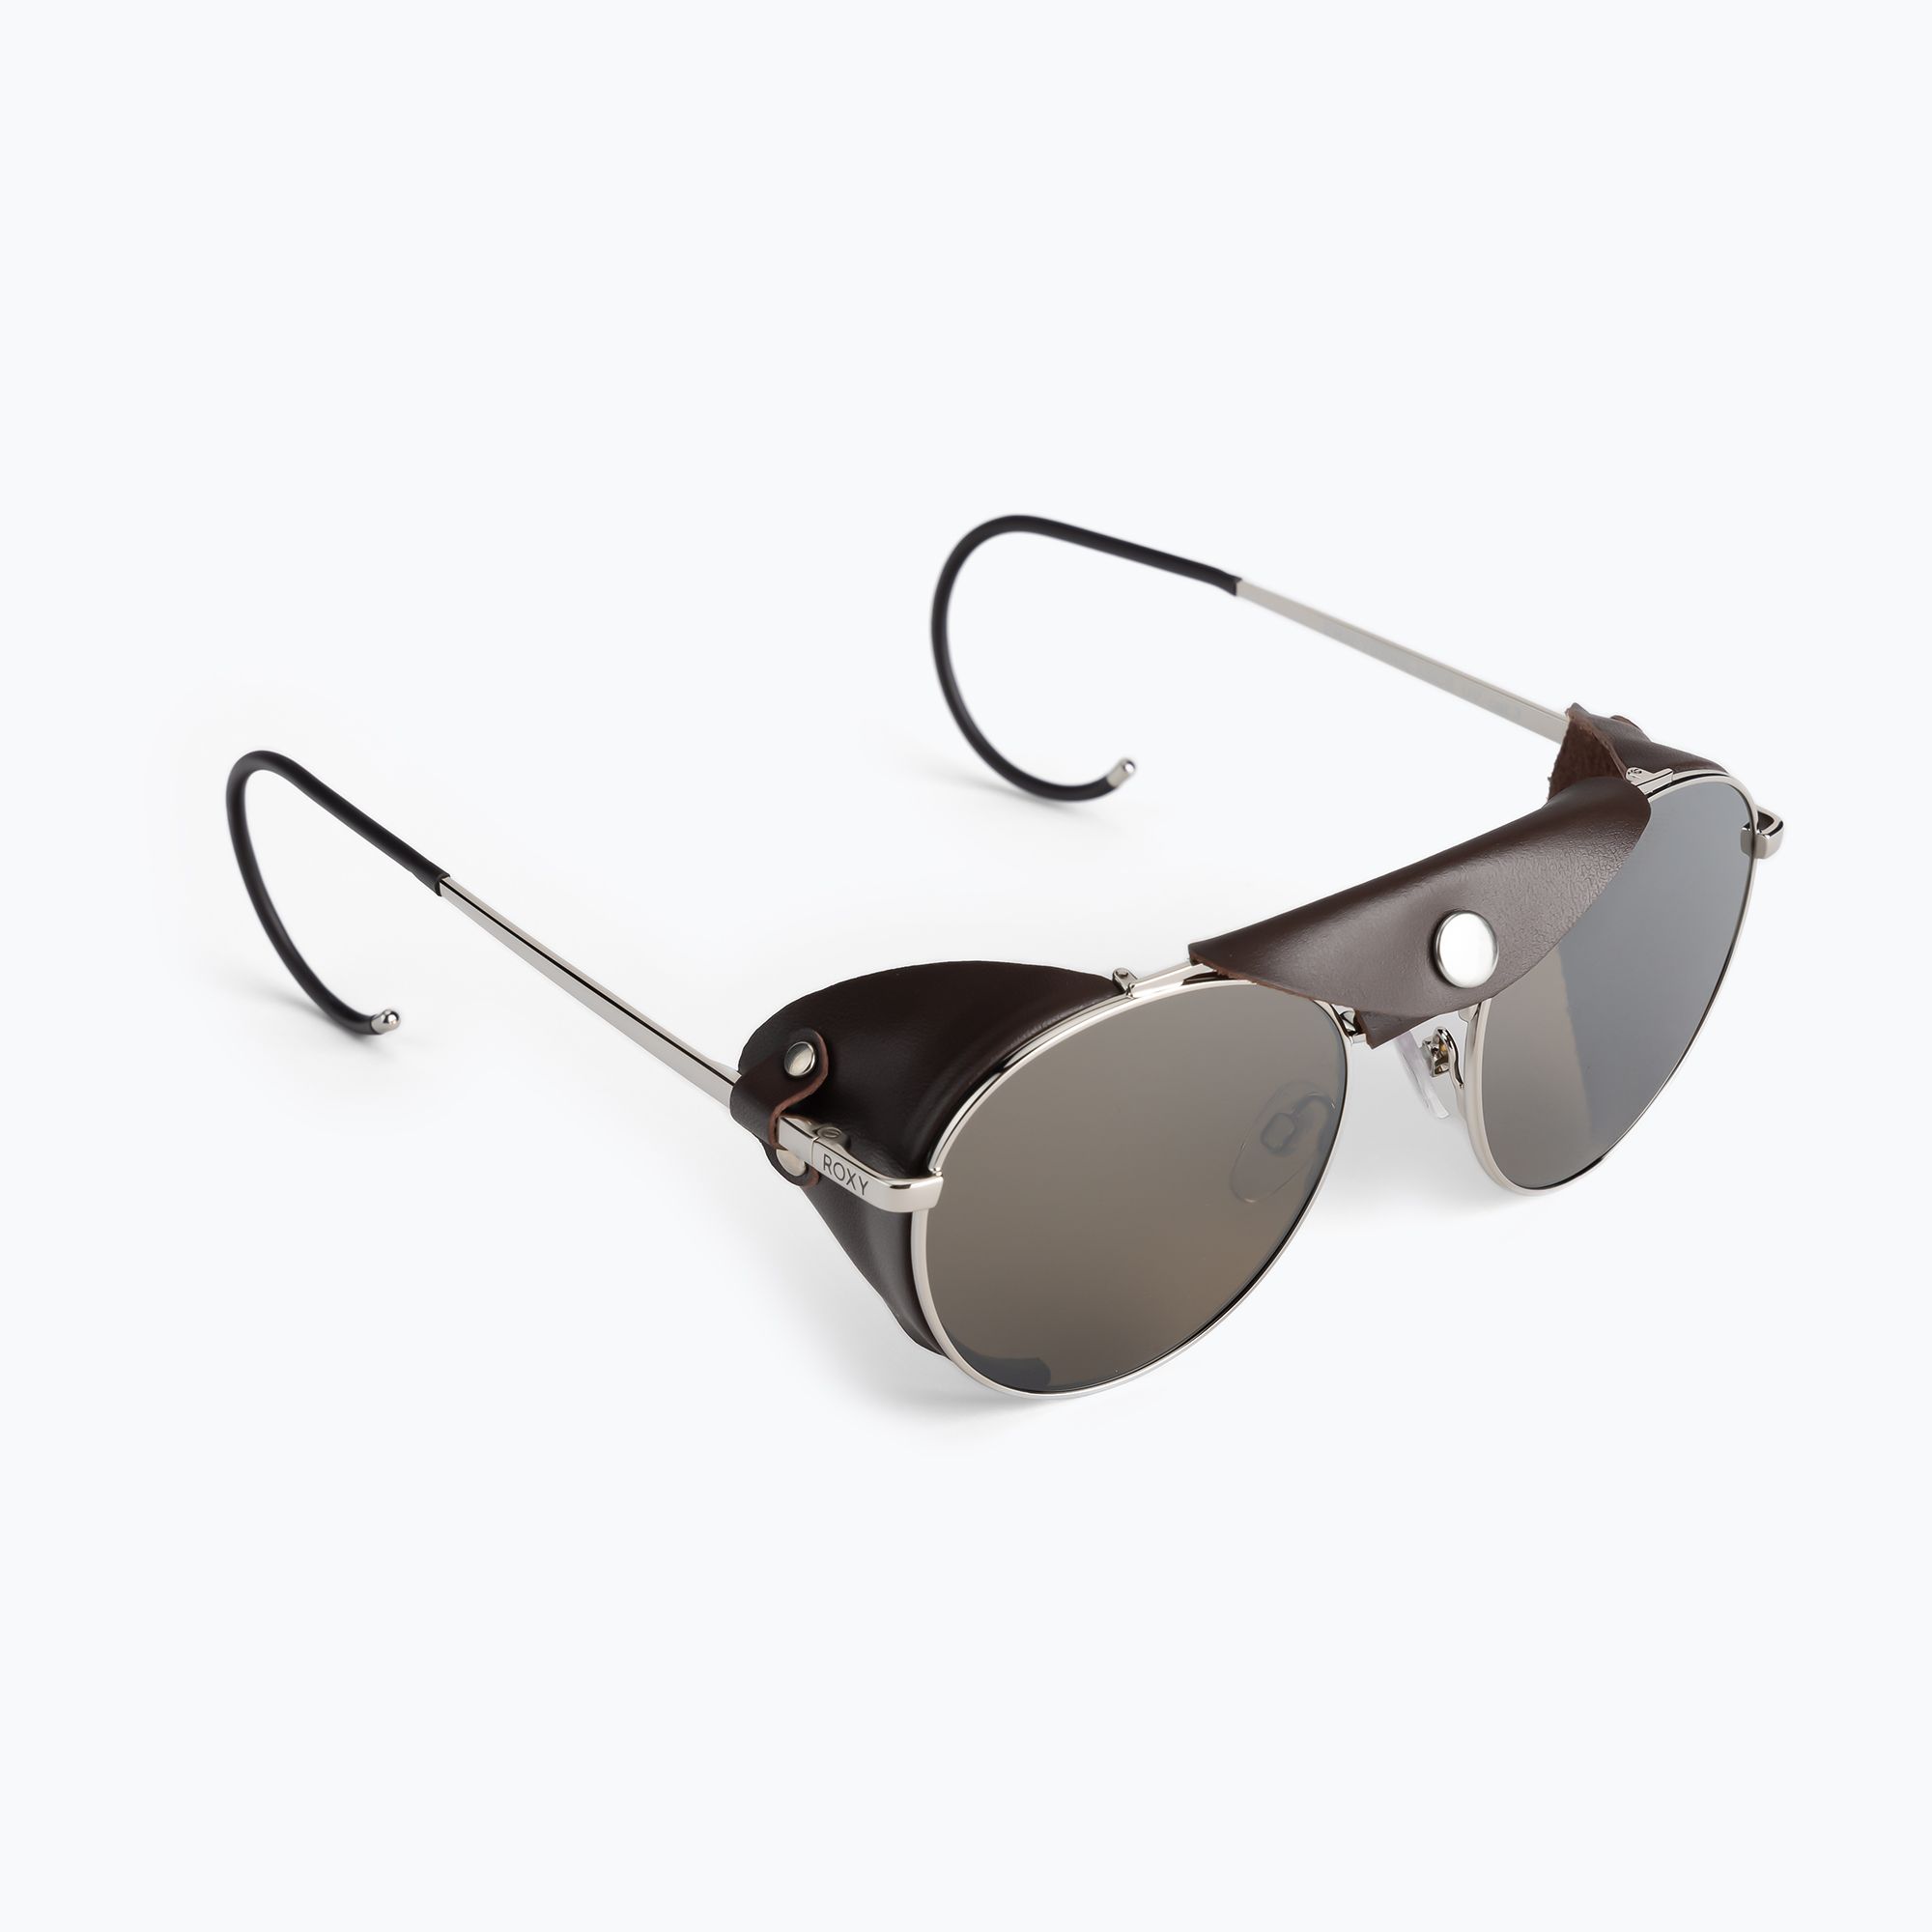 Women's sunglasses ROXY Blizzard 2021 shiny silver/brown leather